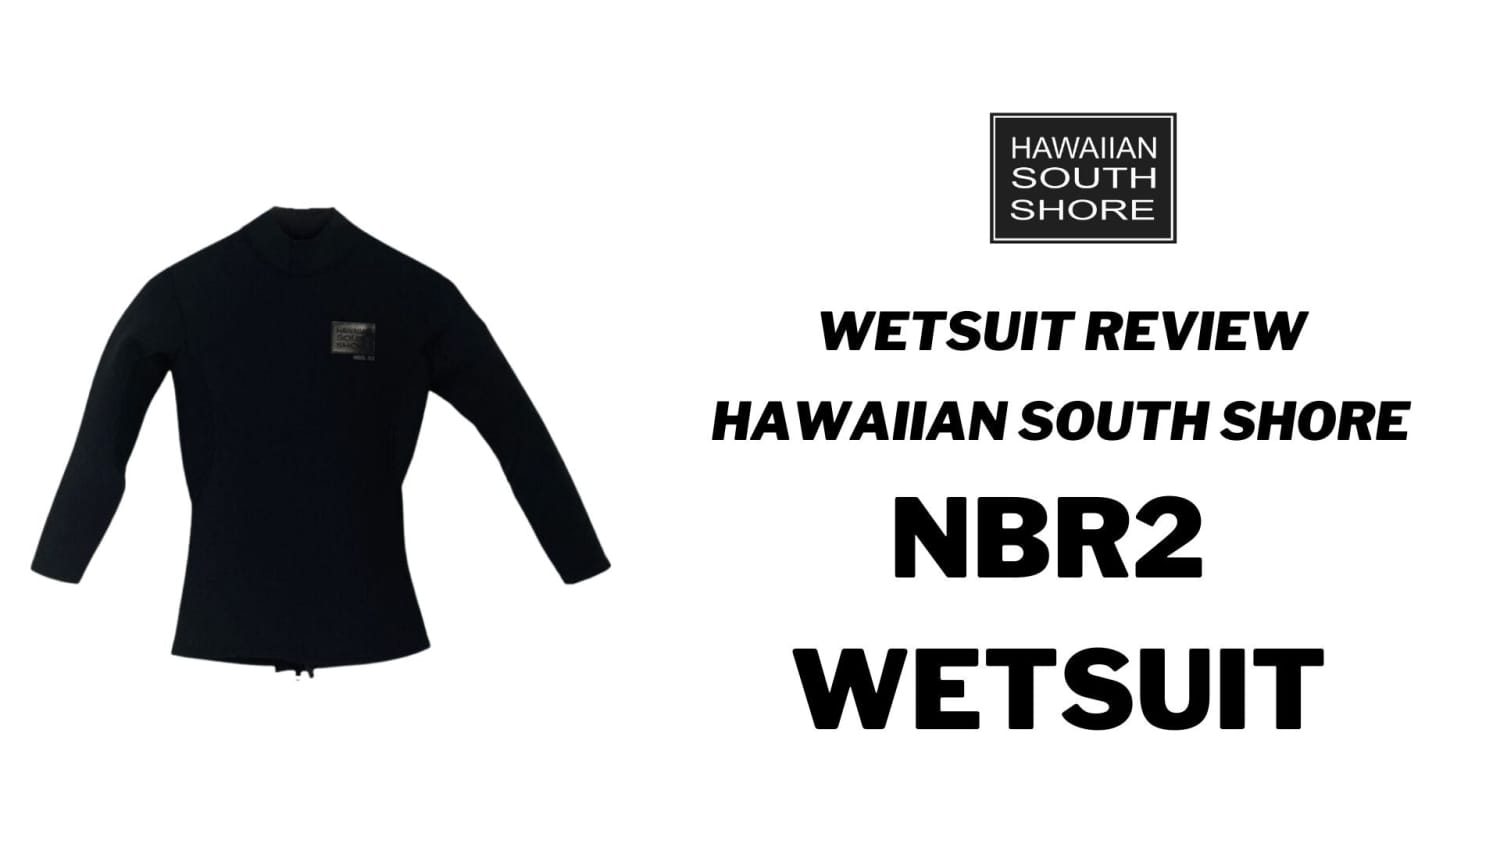 Hawaiian South Shore NBR2 wetsuit review